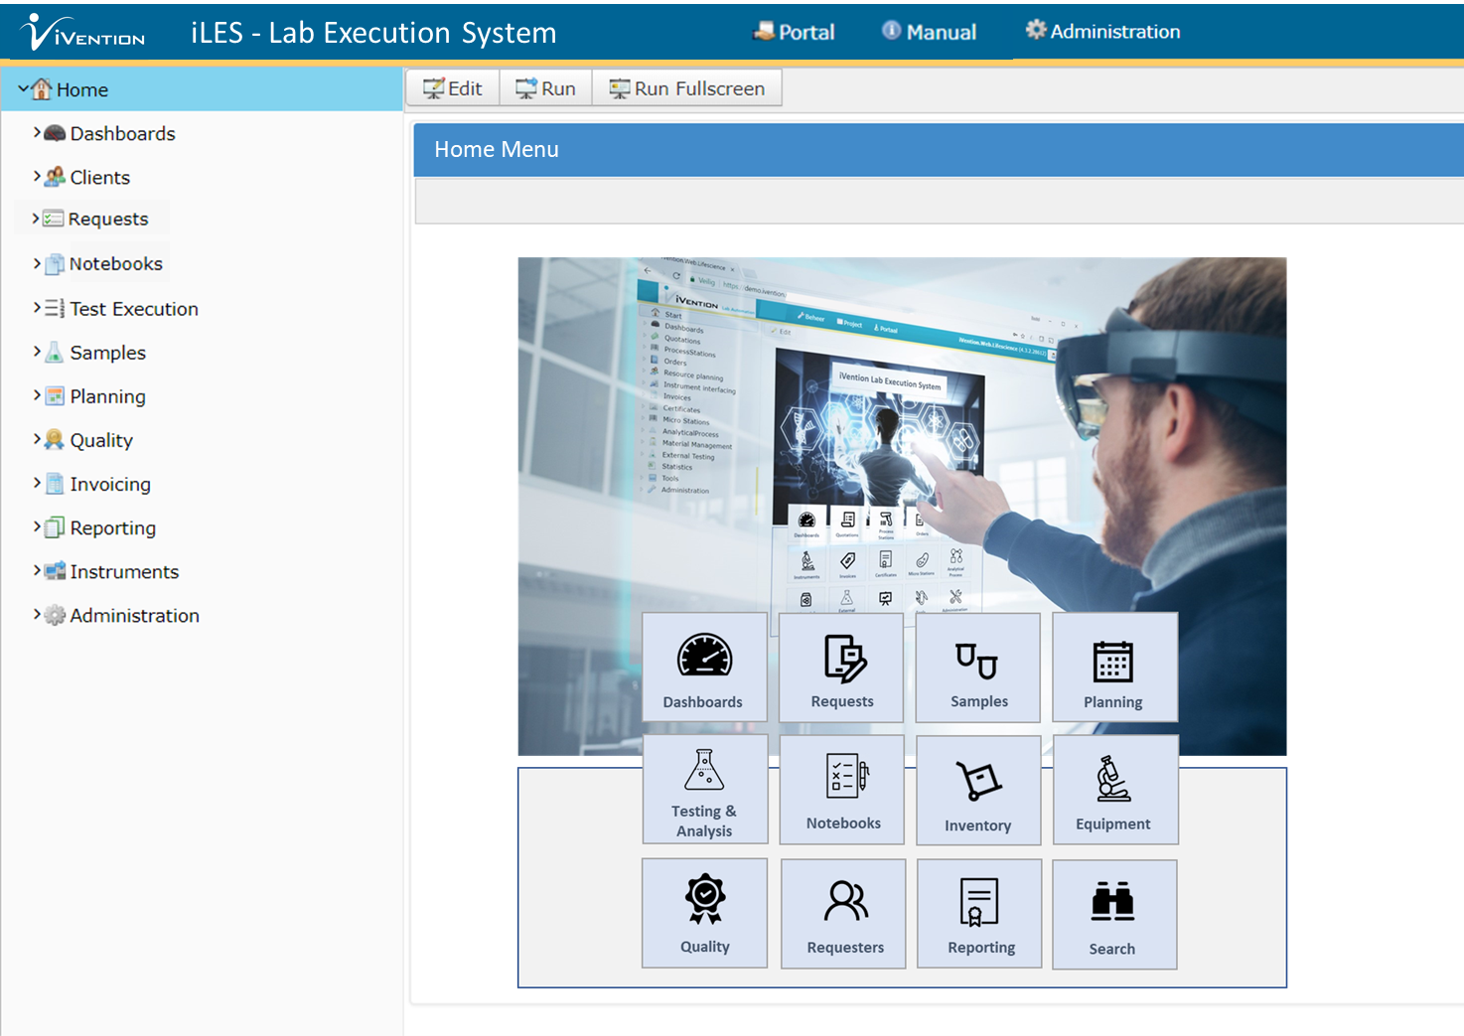 Screenshot - iLES - iVention Lab Execution System - Home Menu